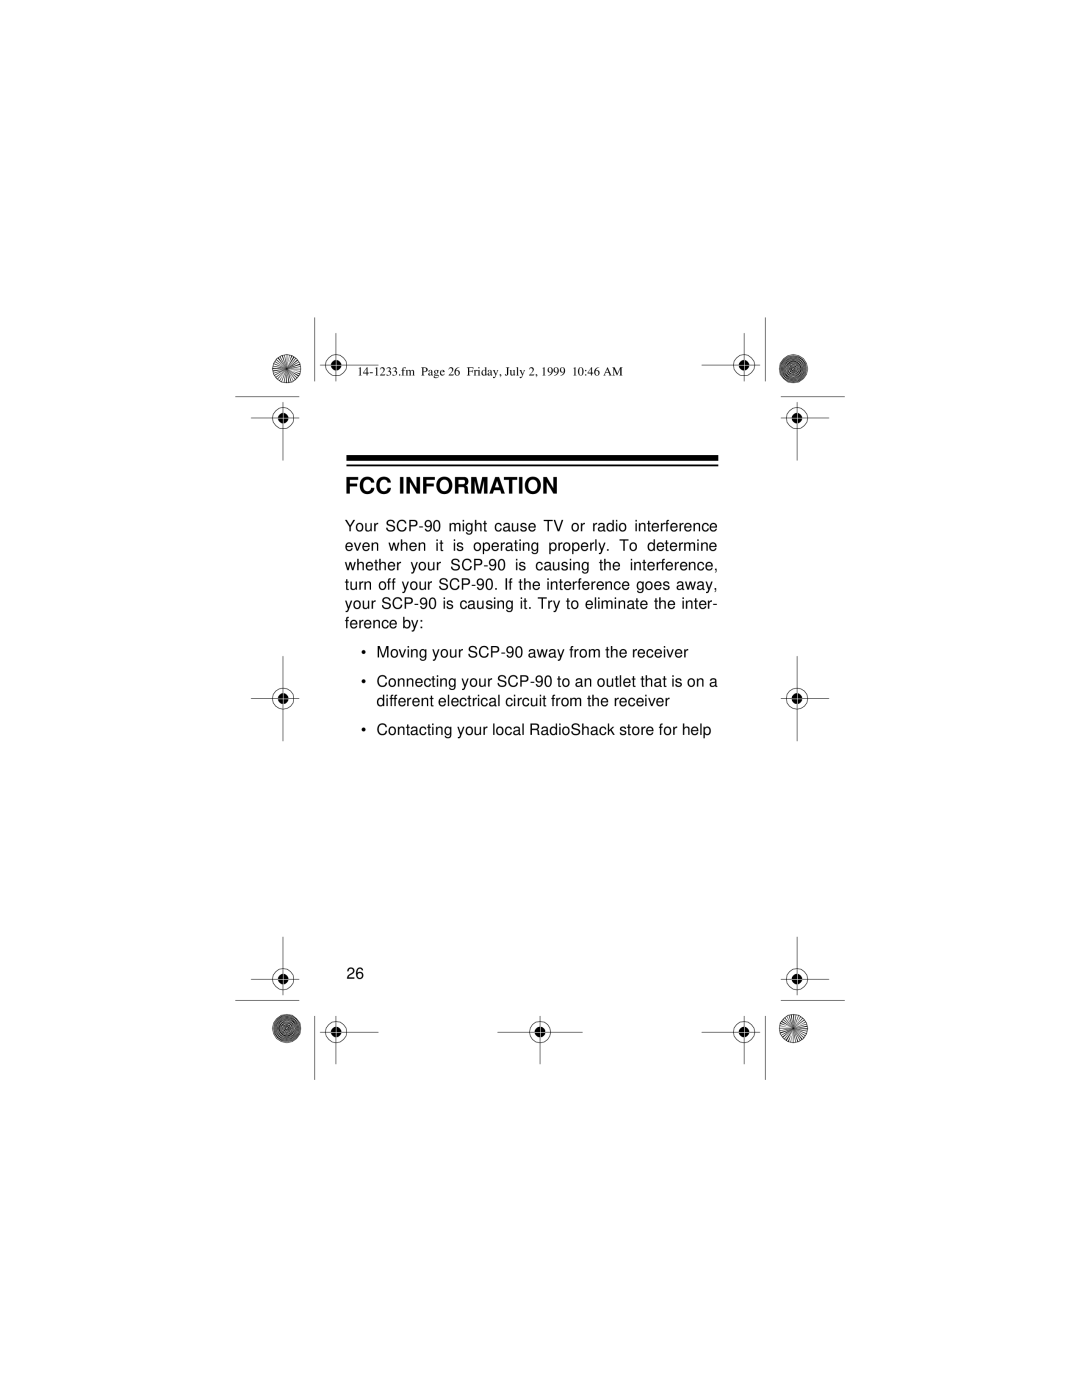 Optimus SCP-90 owner manual Fcc Information 